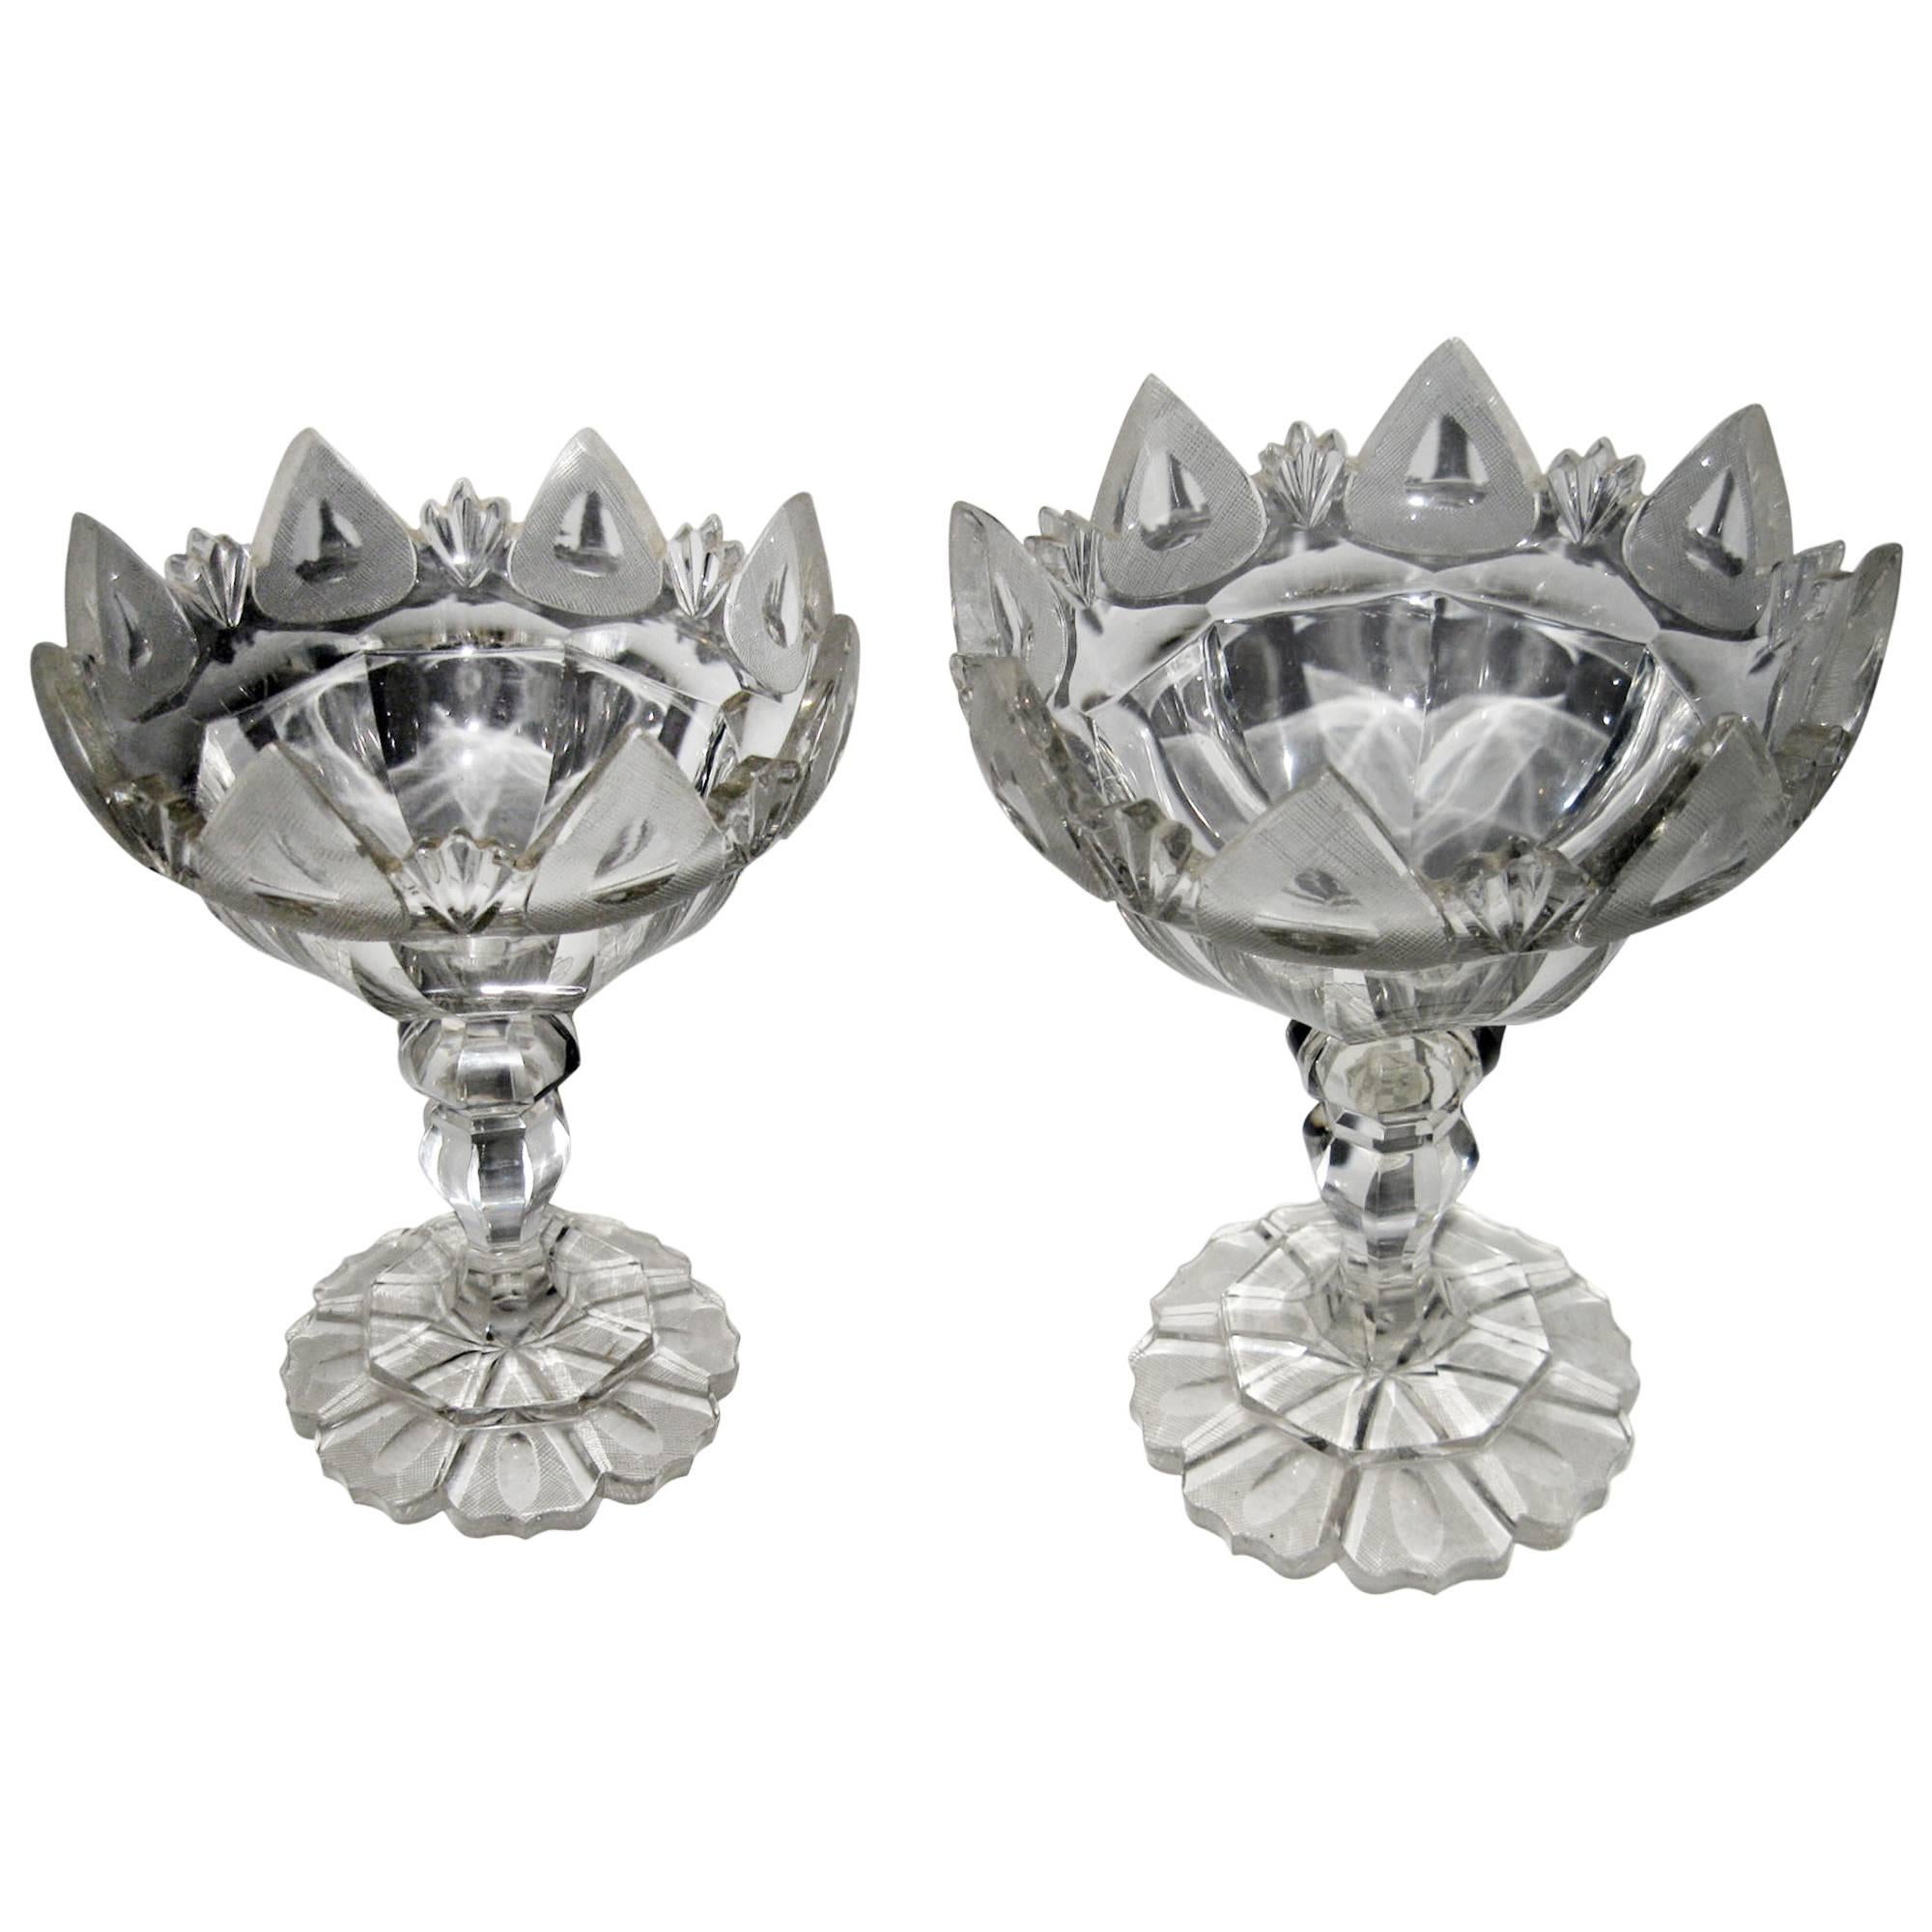 19th century English Georgian Flint Glass Compote Pair